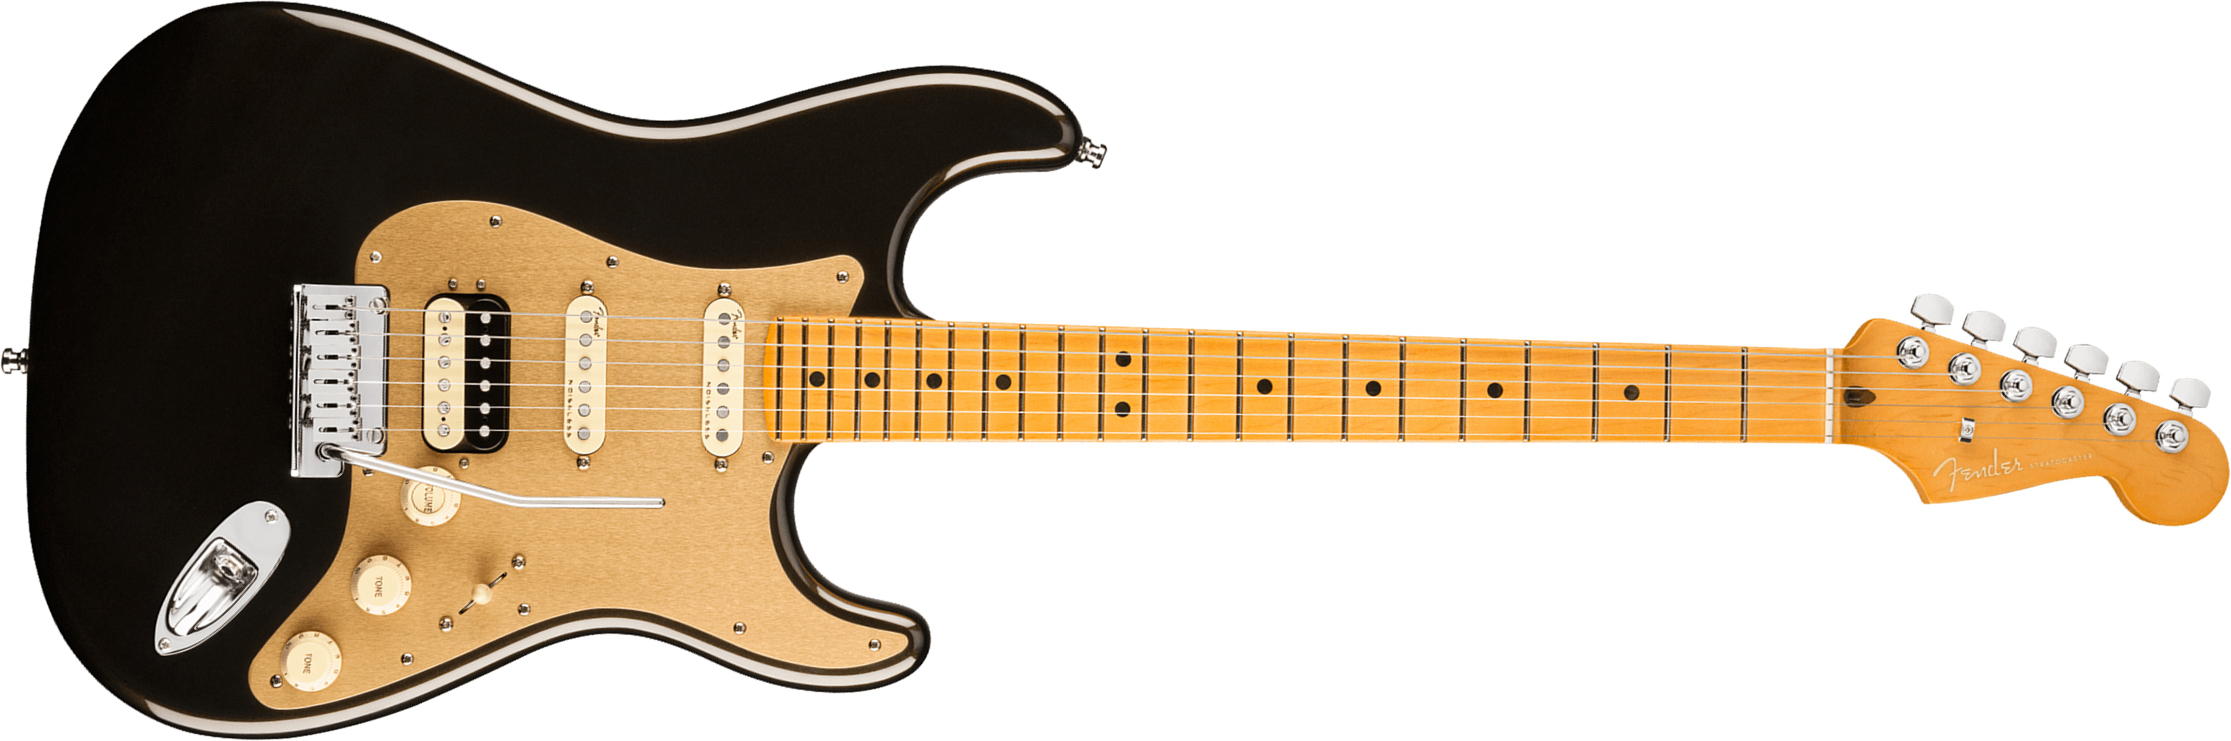 Fender Strat American Ultra Hss 2019 Usa Mn - Texas Tea - Guitare Électrique Forme Str - Main picture